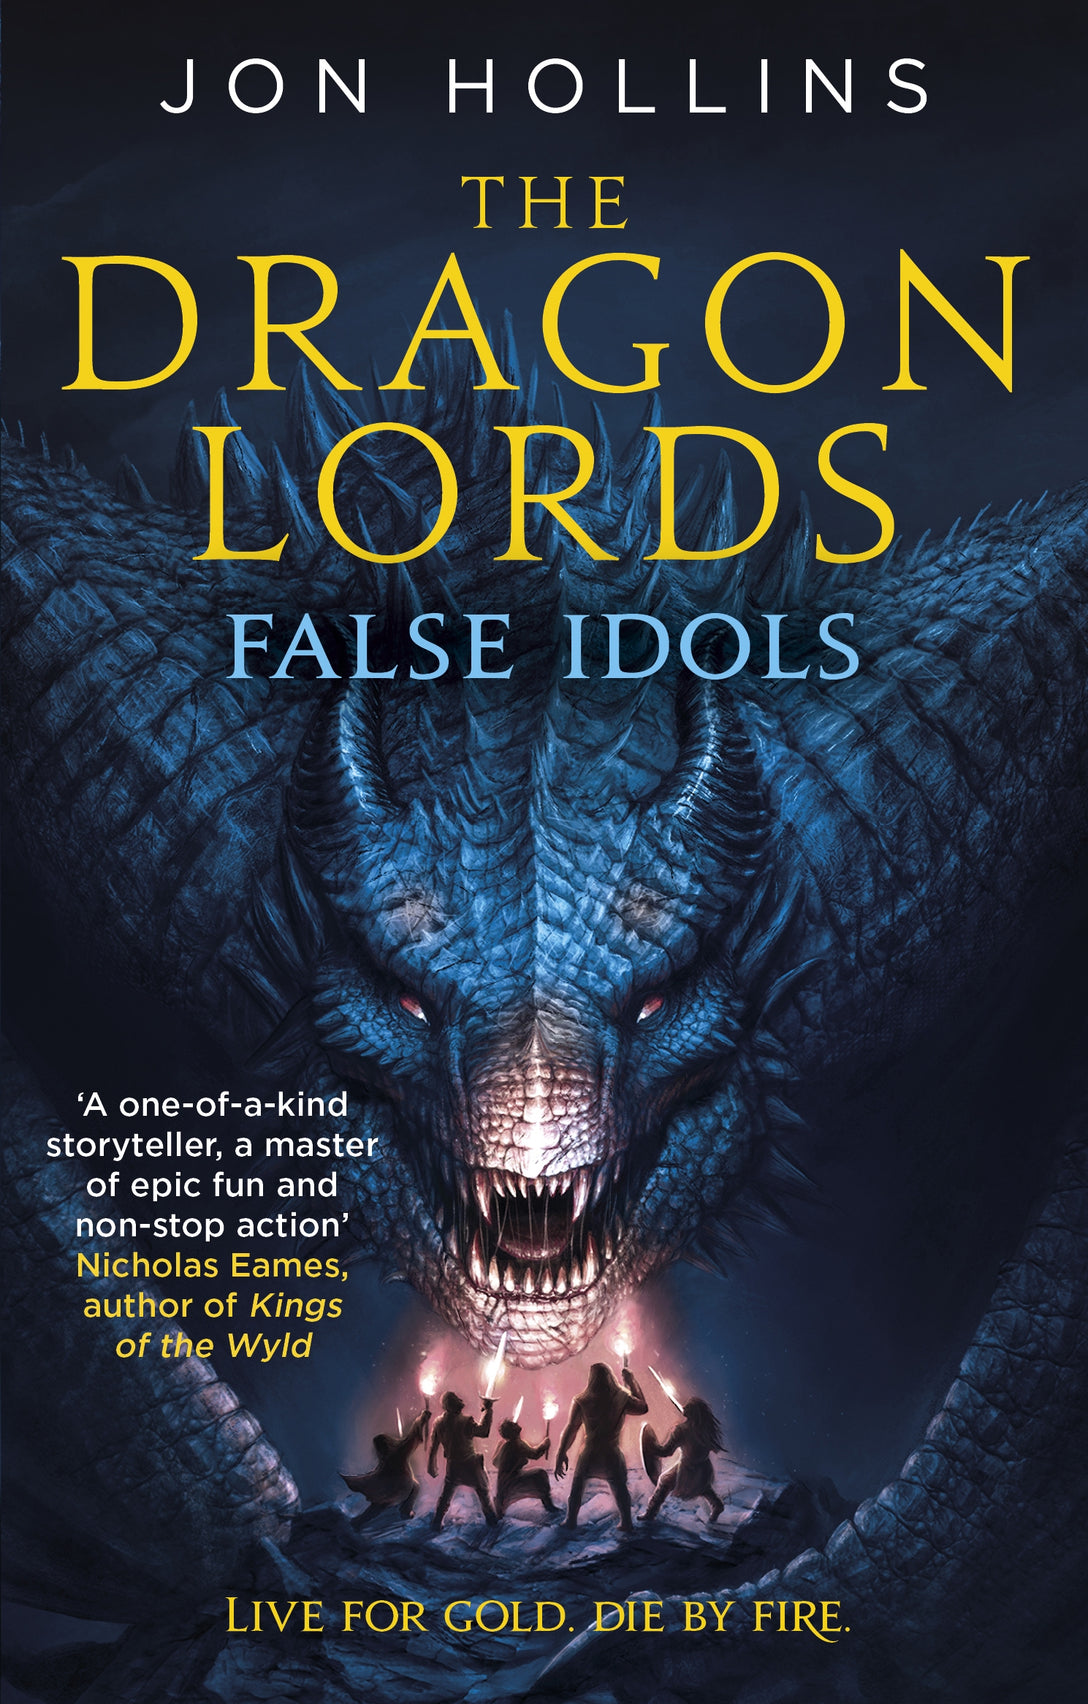 The Dragon Lords 2: False Idols by Jon Hollins